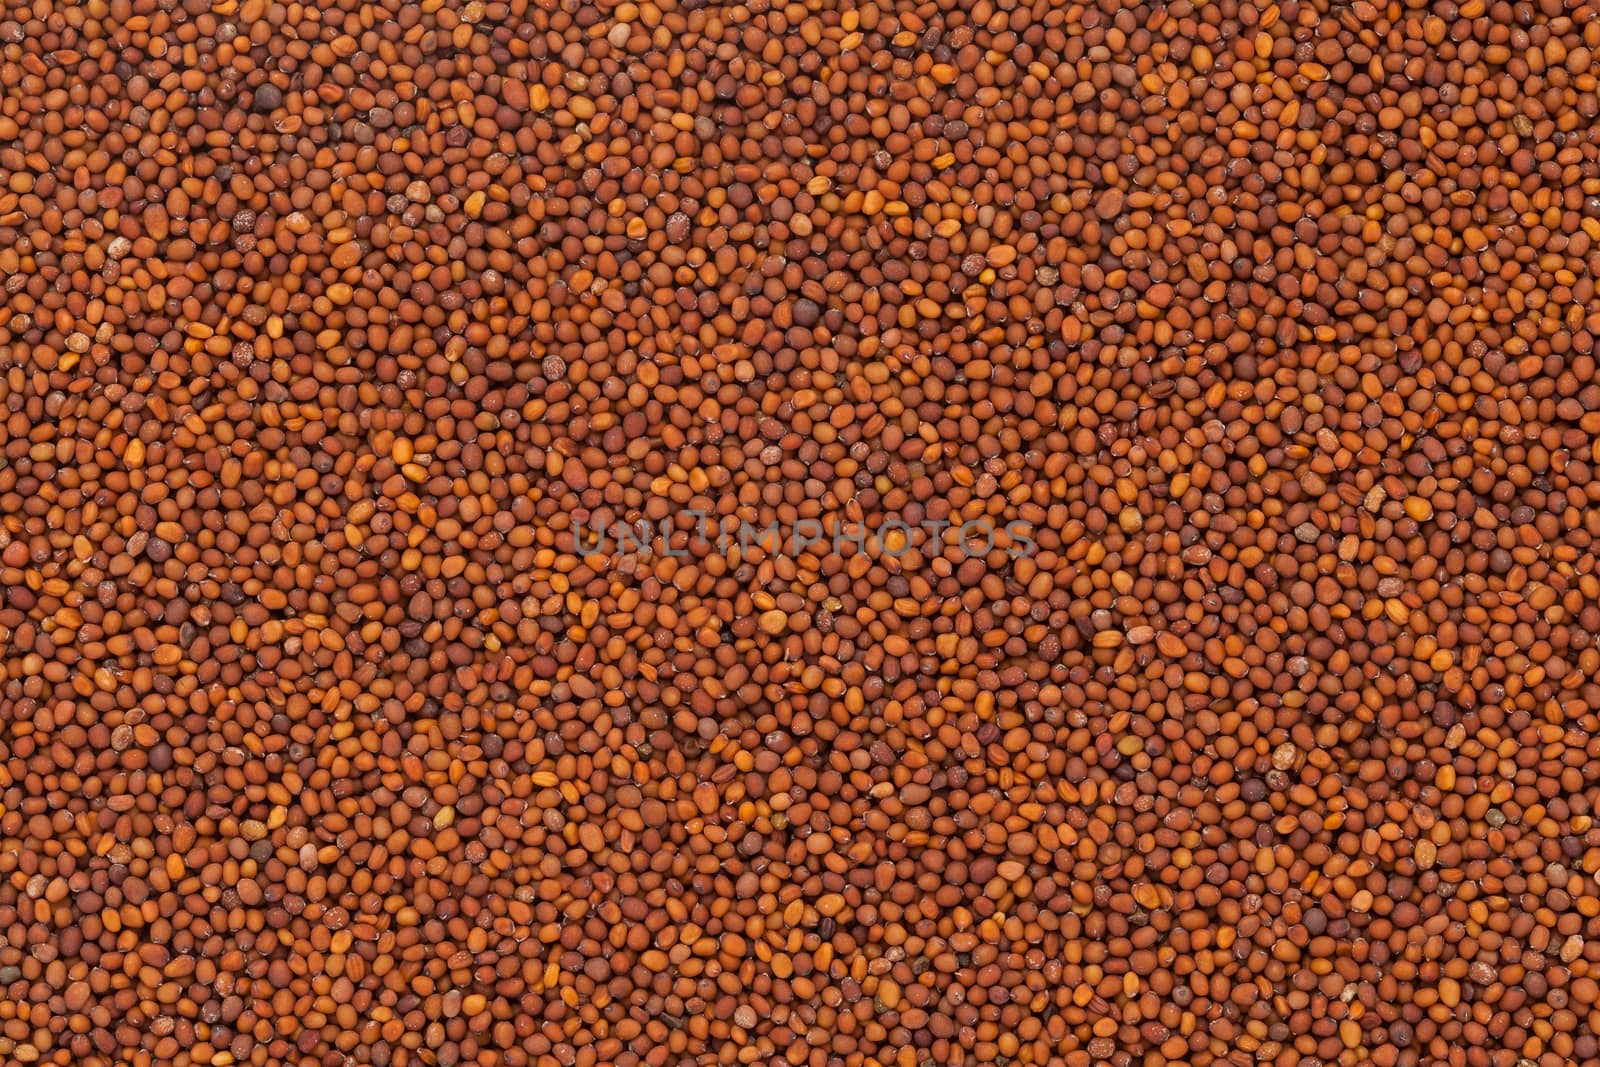 Organic Small Brown Mustard Seeds (Brassica juncea) closeup background texture.